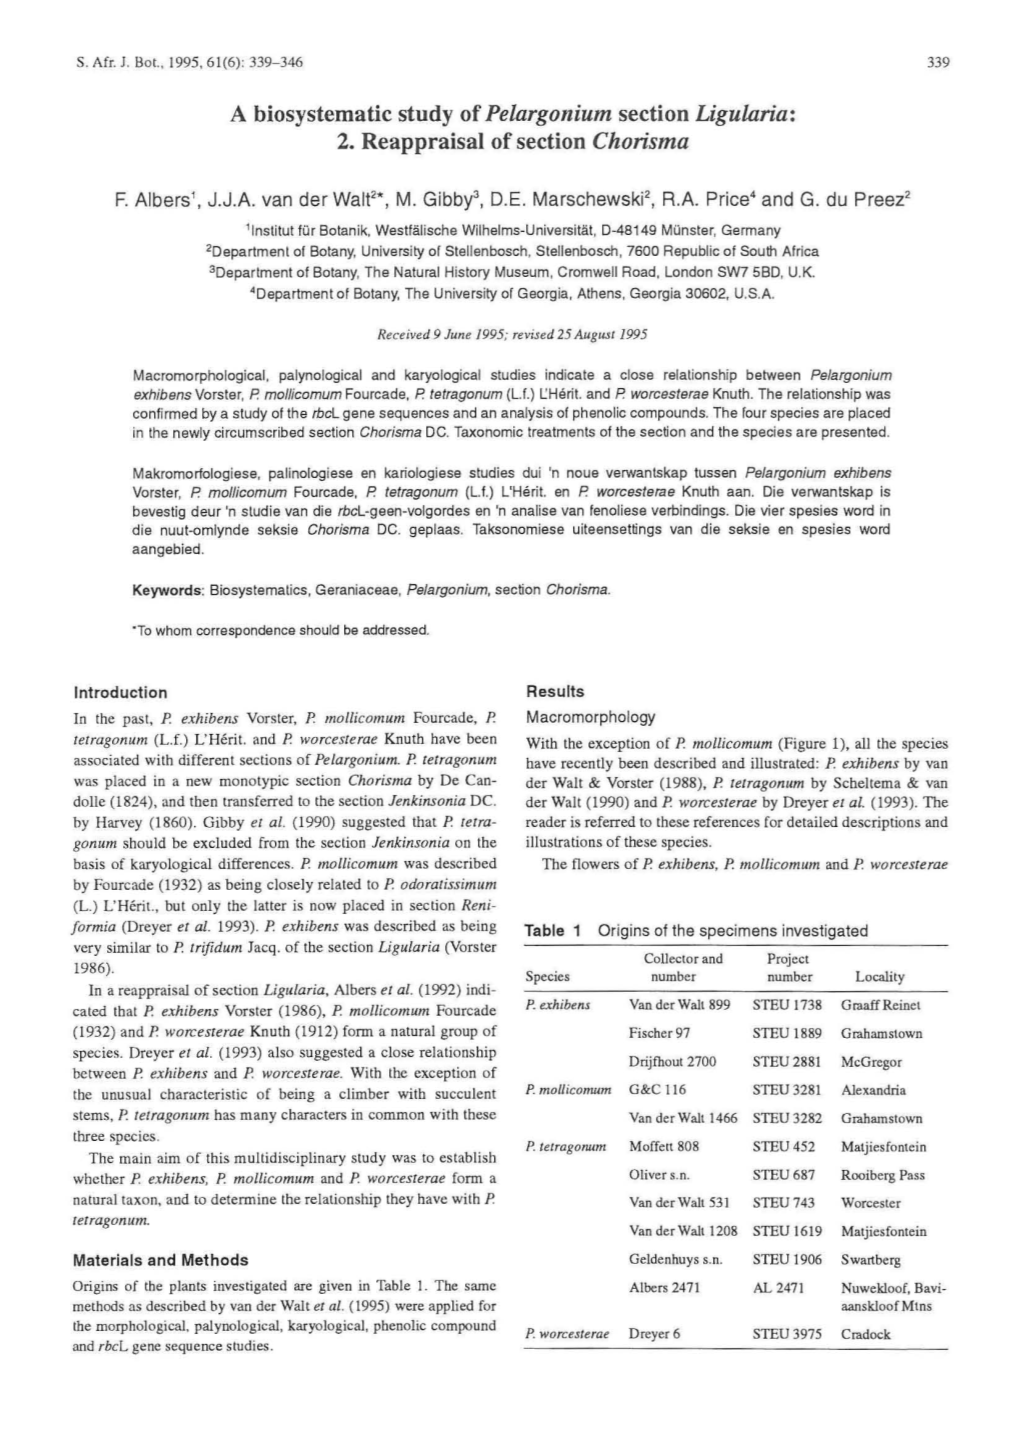 A Biosystematic Study of Pelargonium Section Ligularia: 2